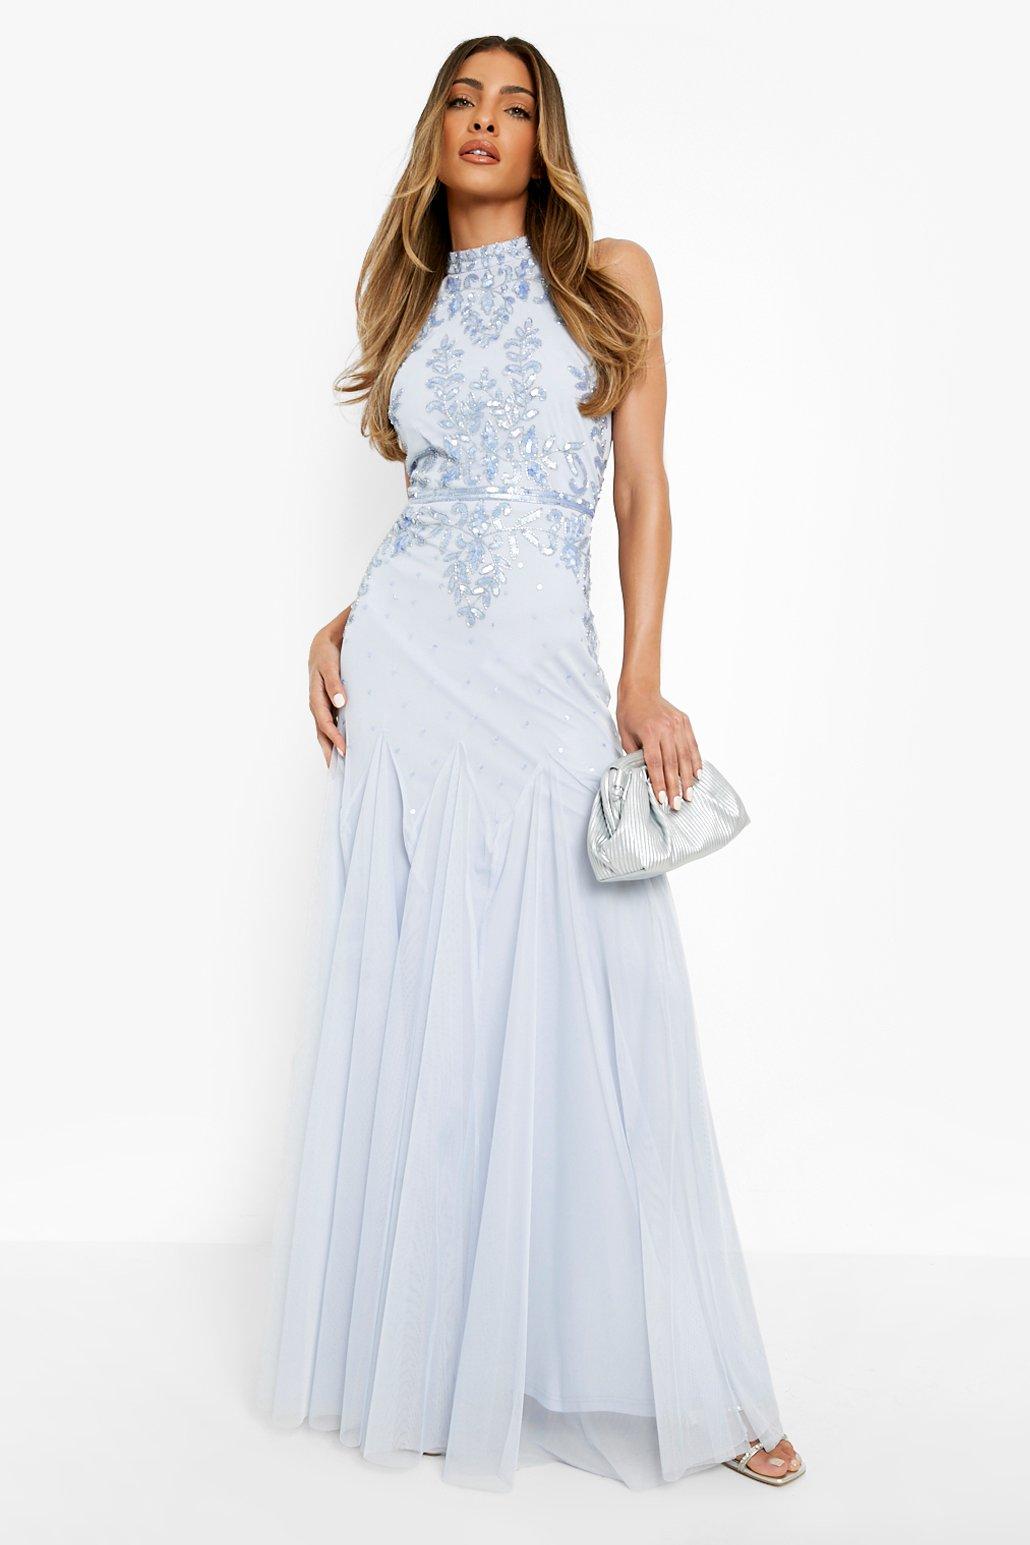 Blue Bridesmaid Dresses | Light ☀ Dusty ...